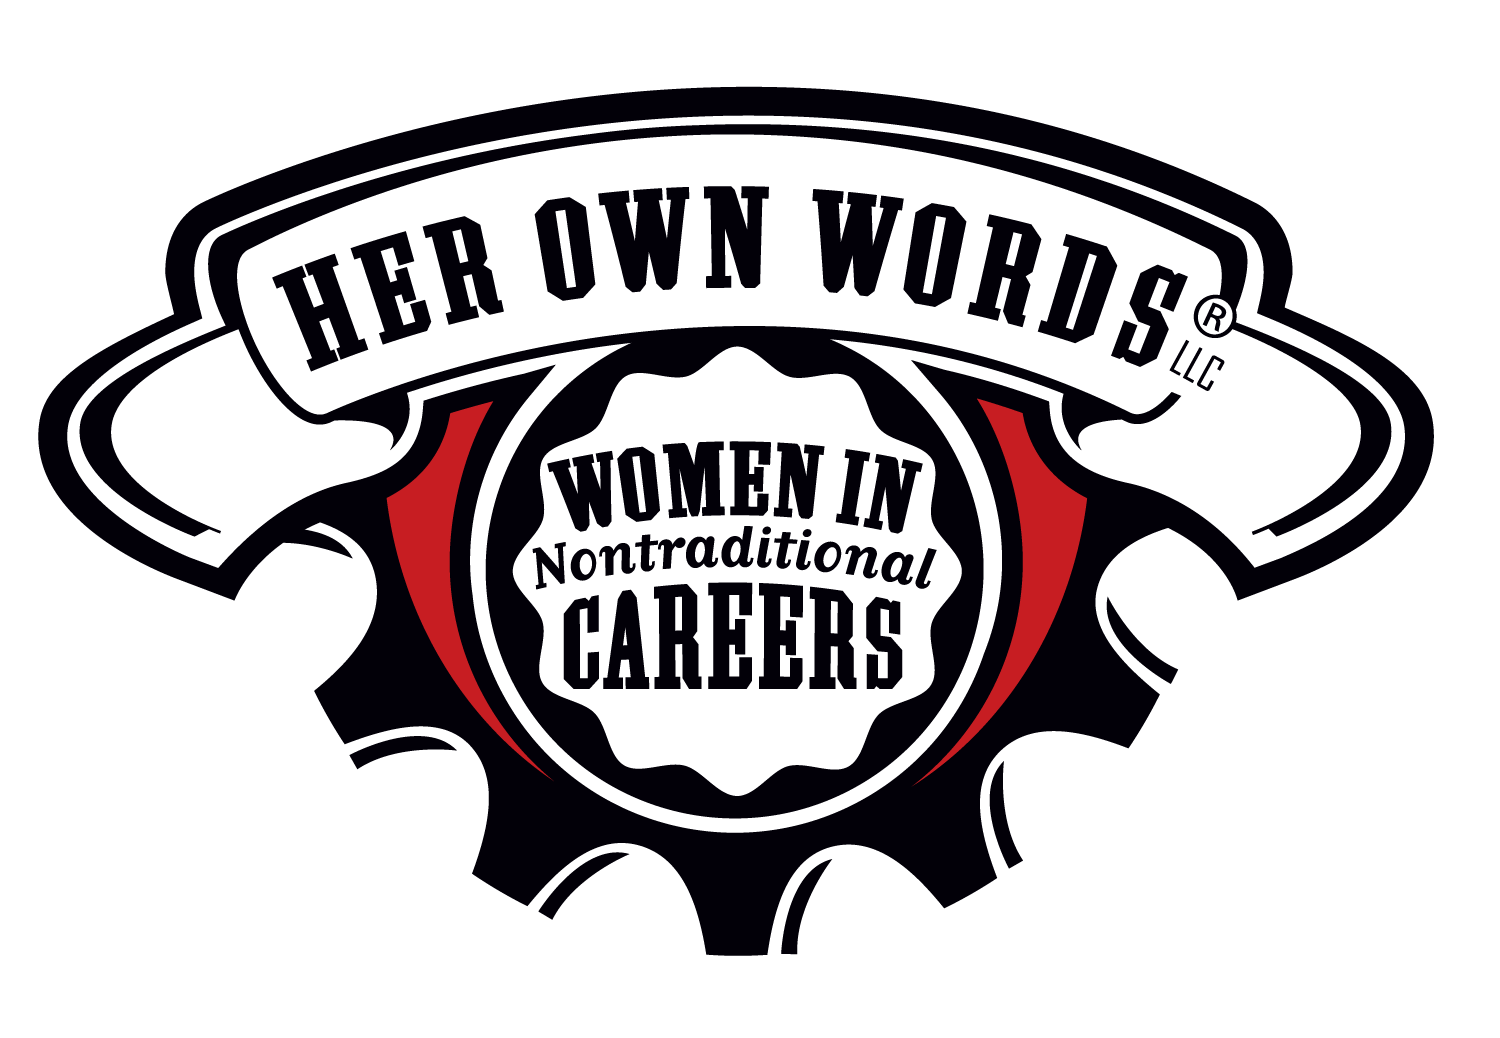 Her Own Words - Women in Nontraditional Careers